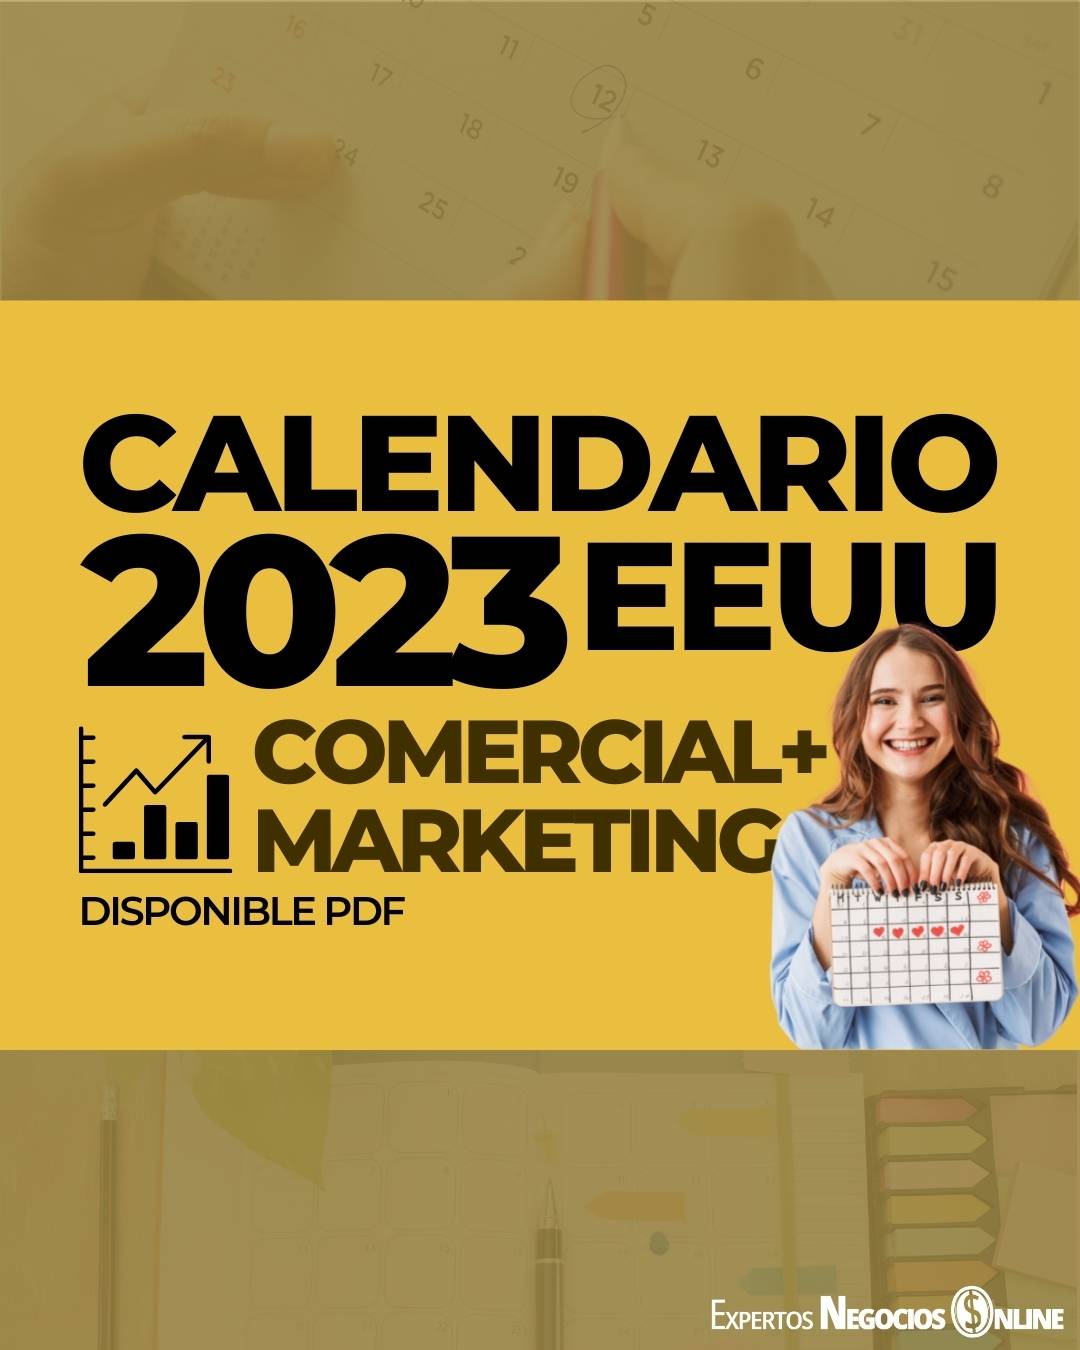 Calendario USA 2023 para Marketing, Comercial & eCommerce